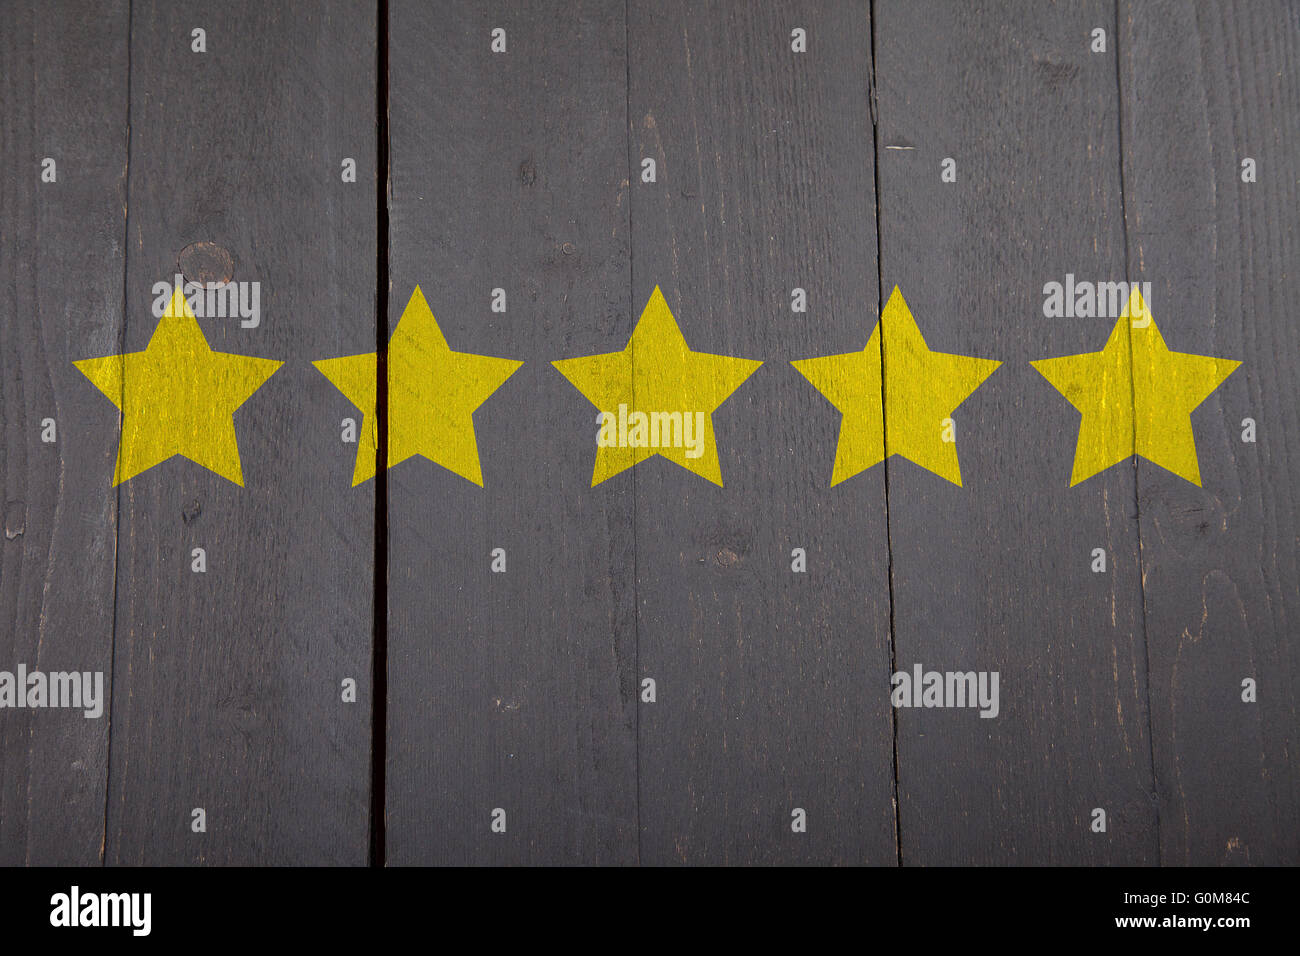 Five yellow ranking stars on black wooden background Stock Photo